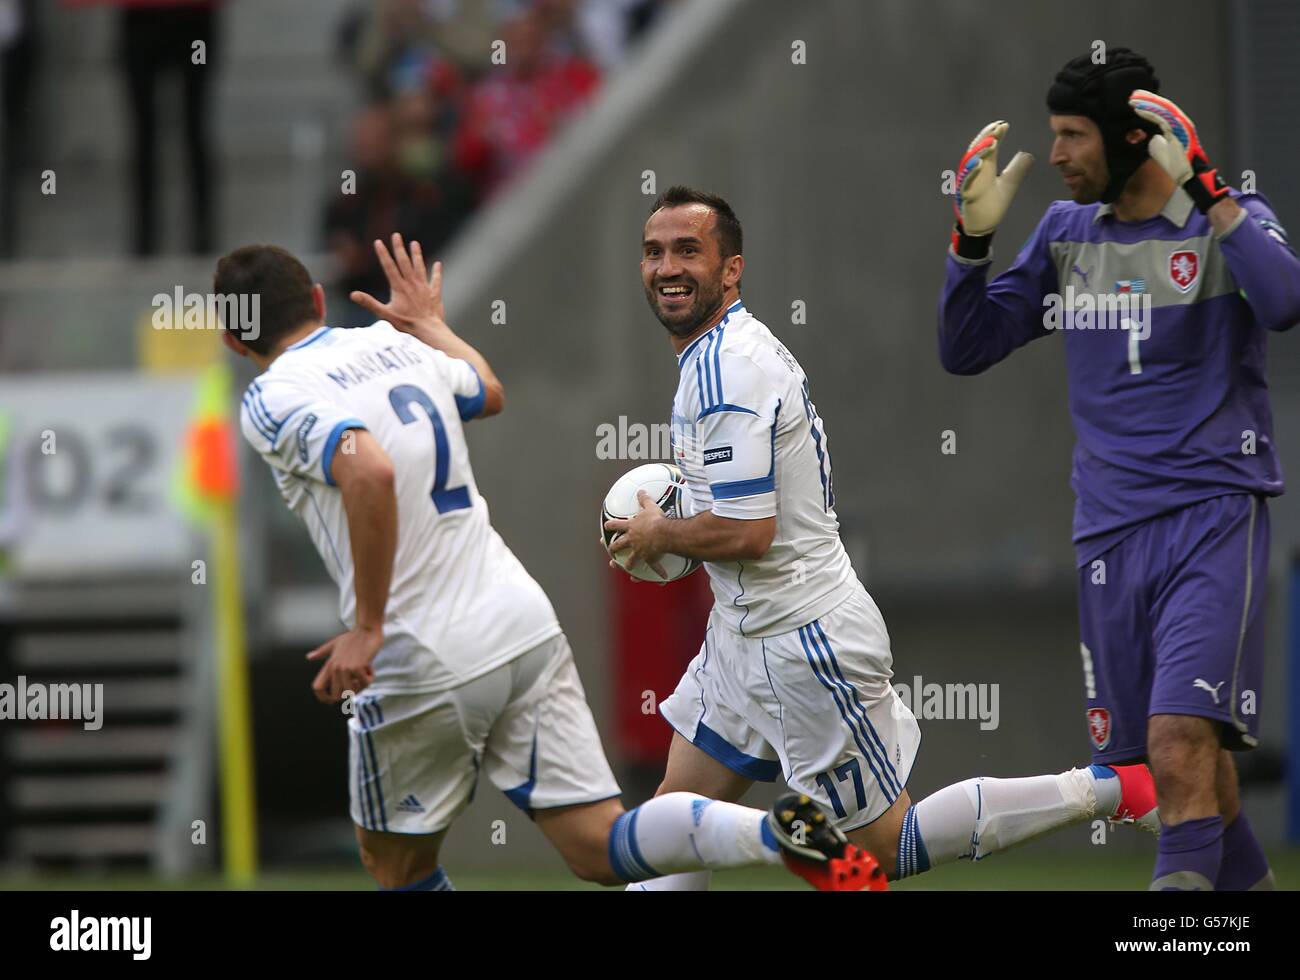 Greece's Theofanis Gekas (centre) celebrates scoring his team's opening goal after Czech Republic's goalkeeper Petr Cech (right) makes an error Stock Photo